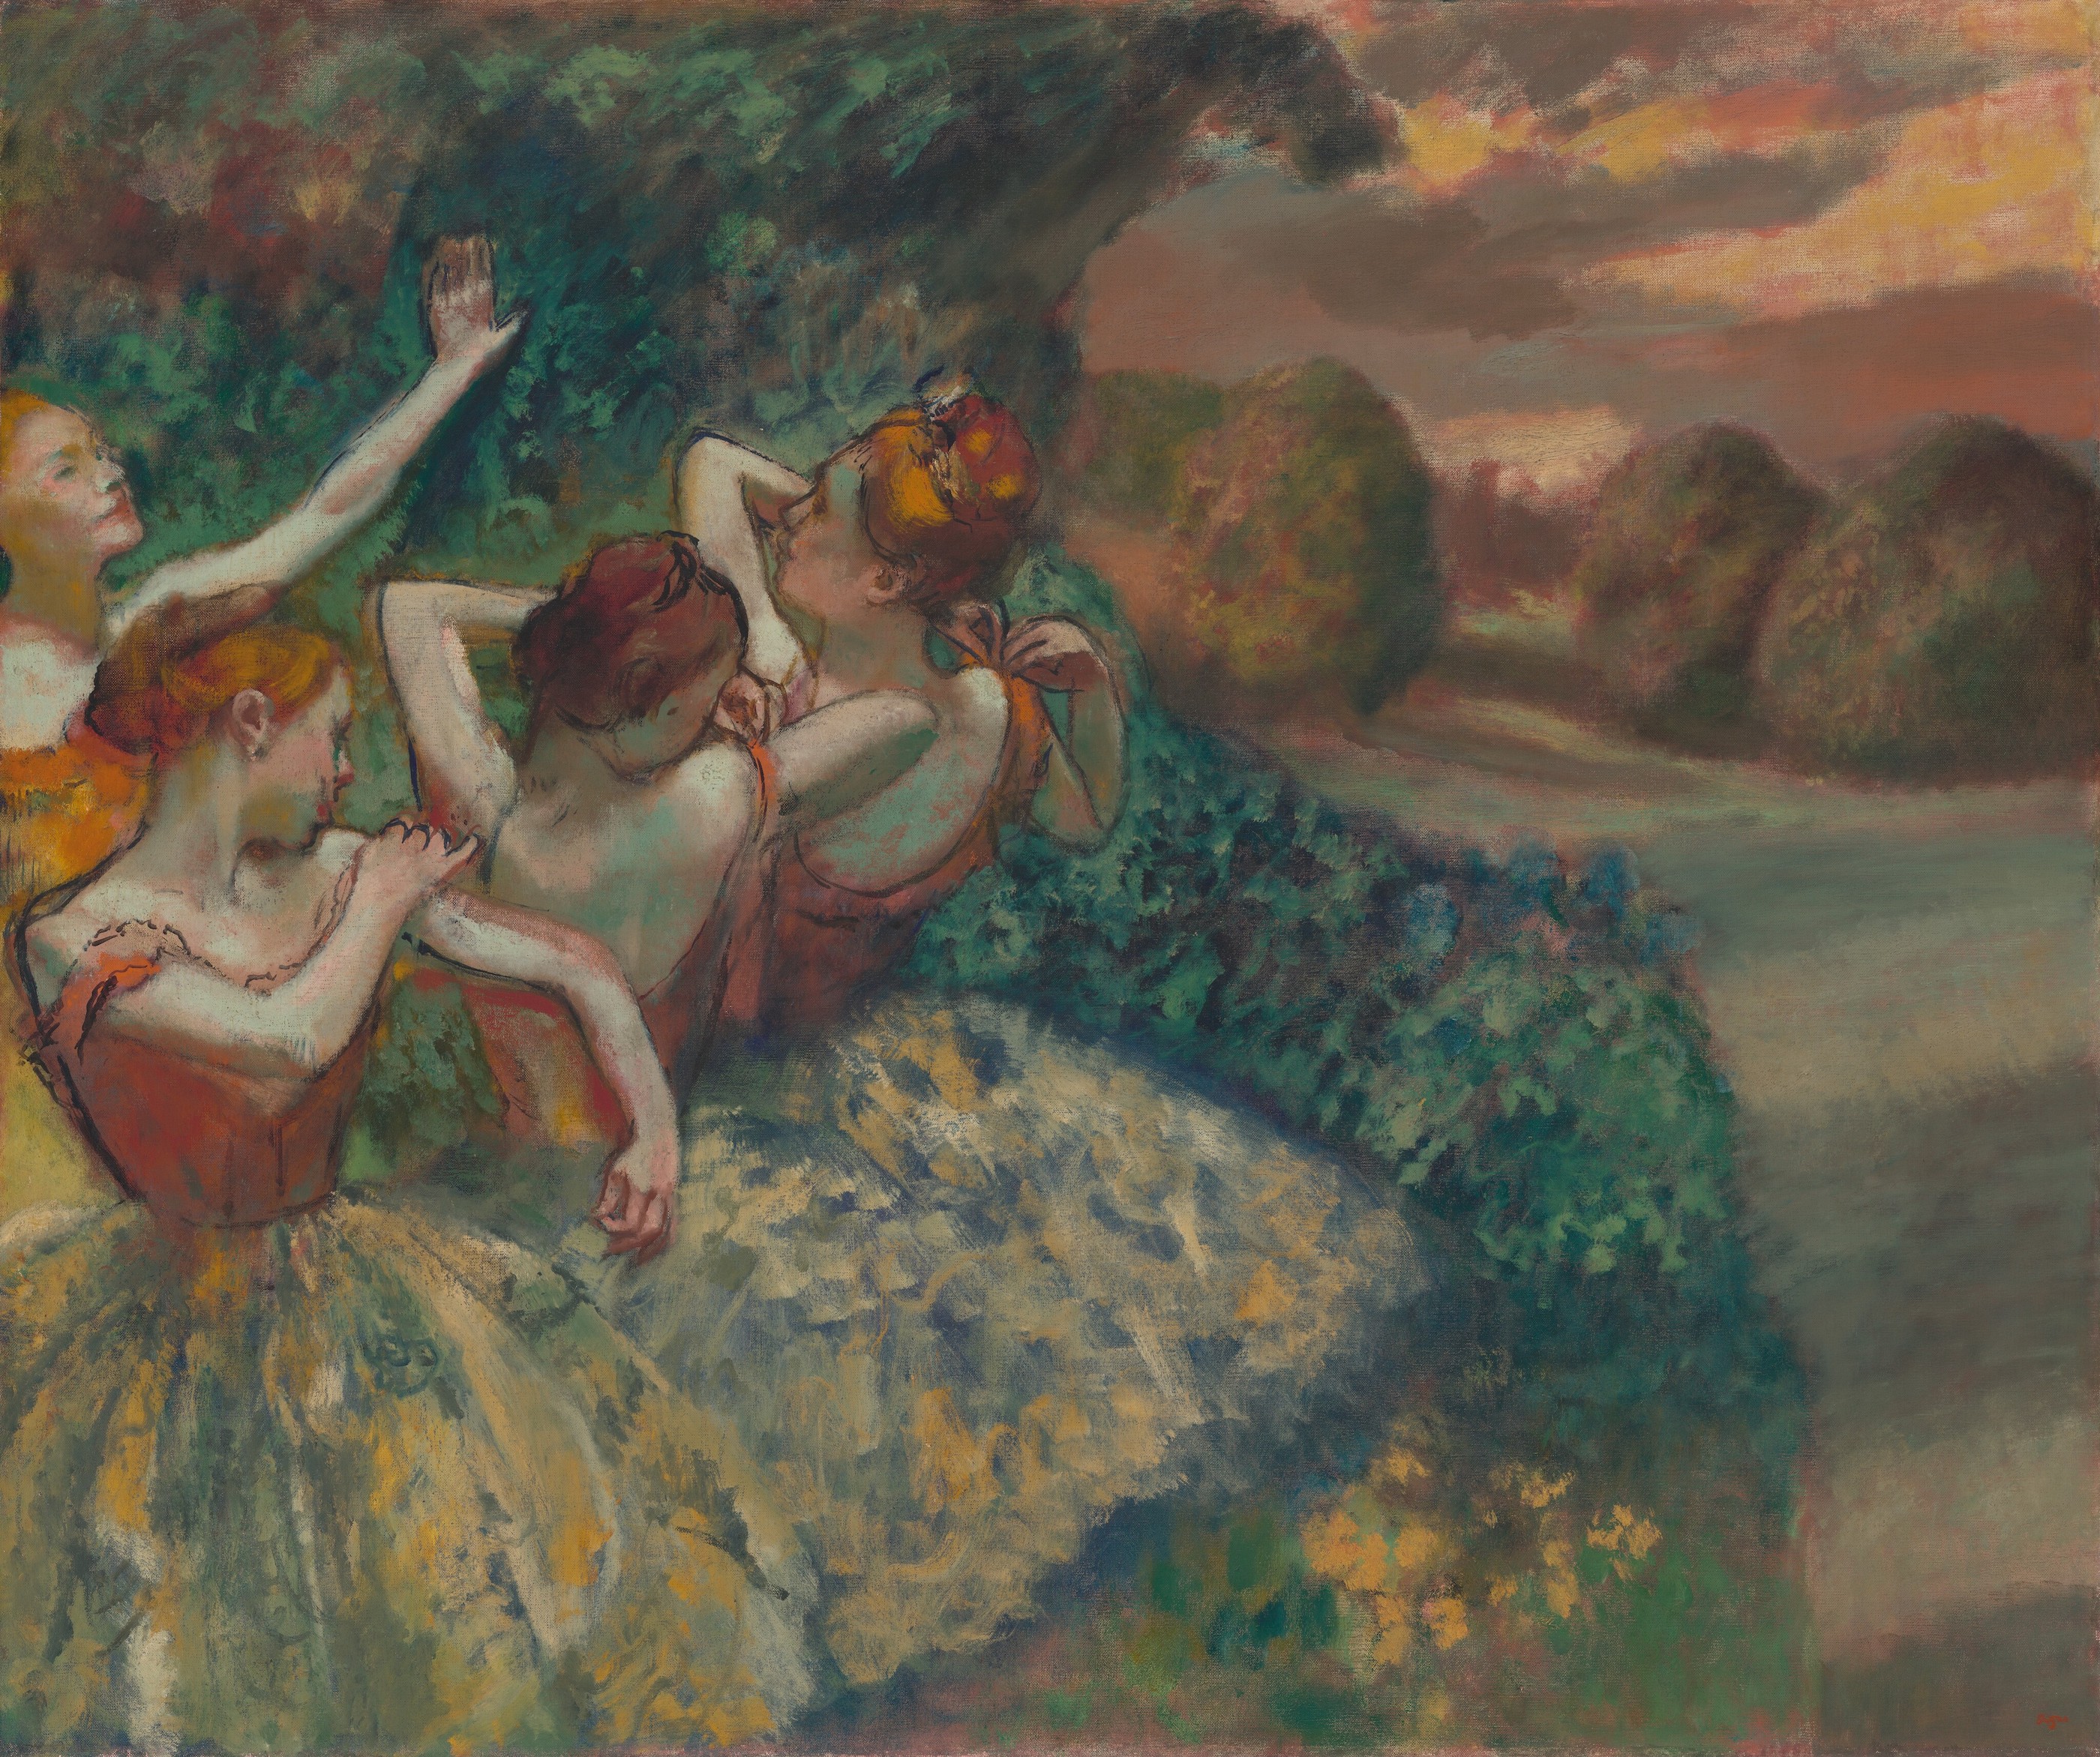 Cuatro bailarinas by Edgar Degas - 1899 - 151.1 x 180.2 cm National Gallery of Art